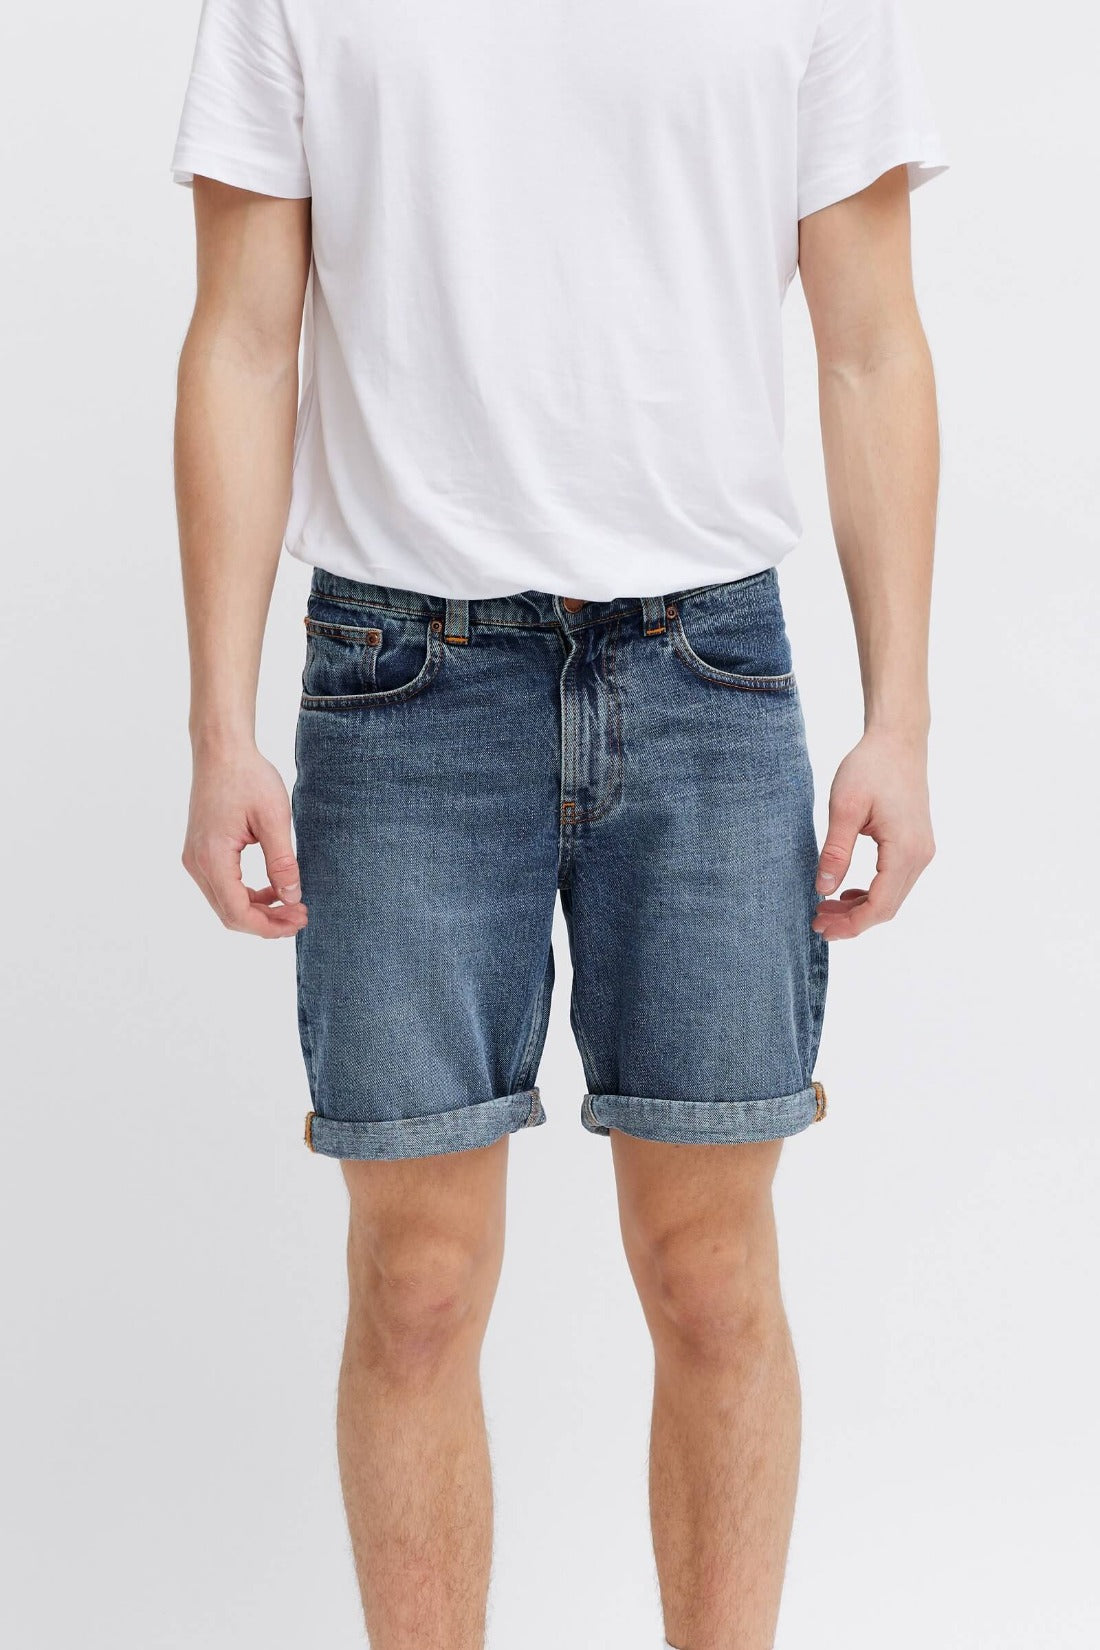 Lease shorts for men